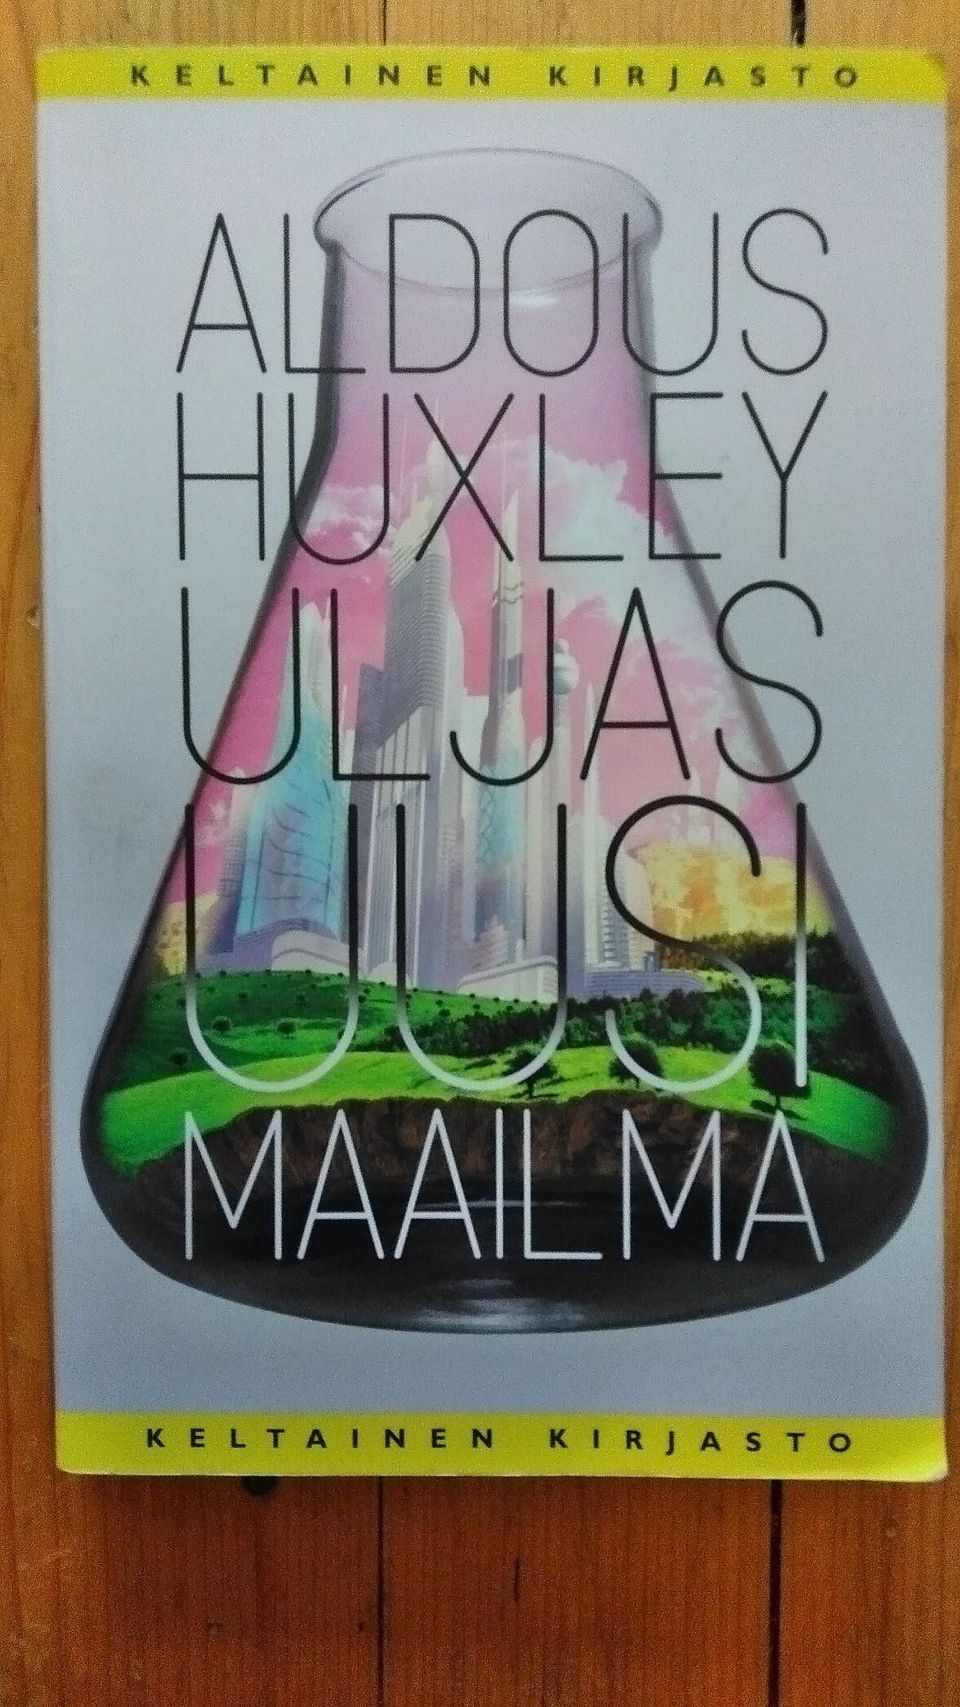 Aldous Huxley - Uljas uusi maailma